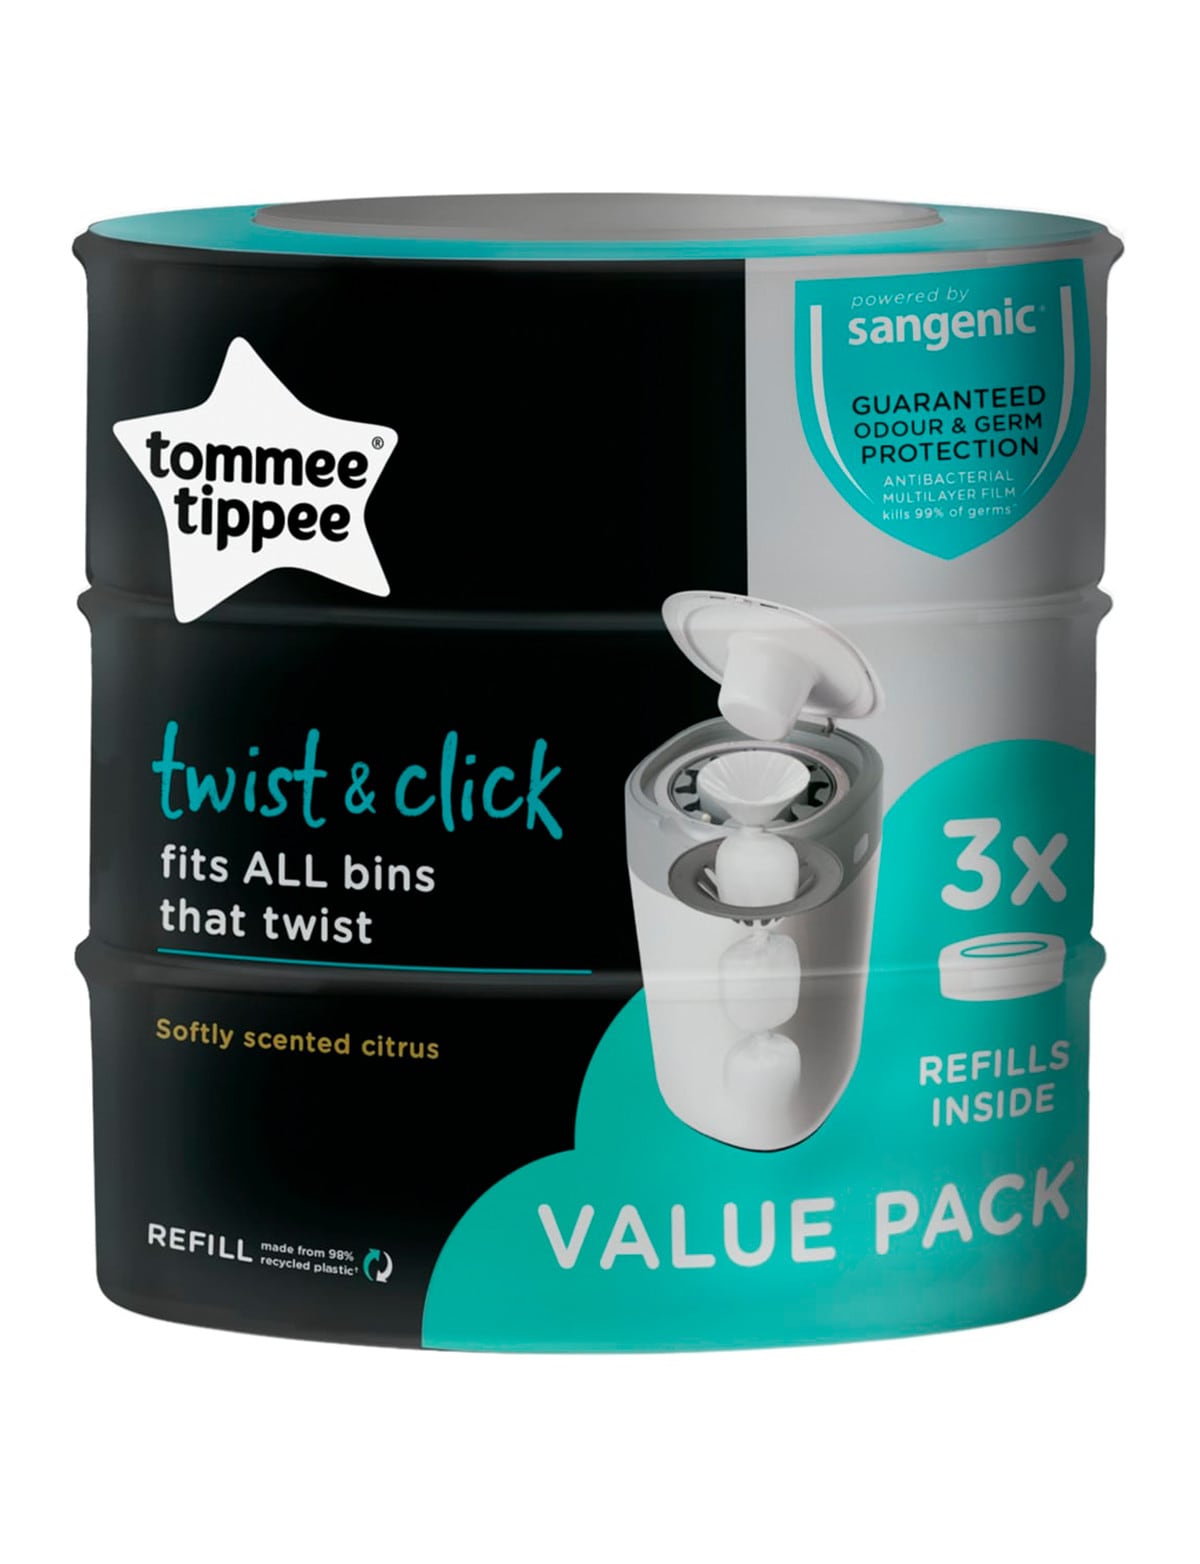 Tommee Tippee Twist Click Advanced Nappy Disposal Bin